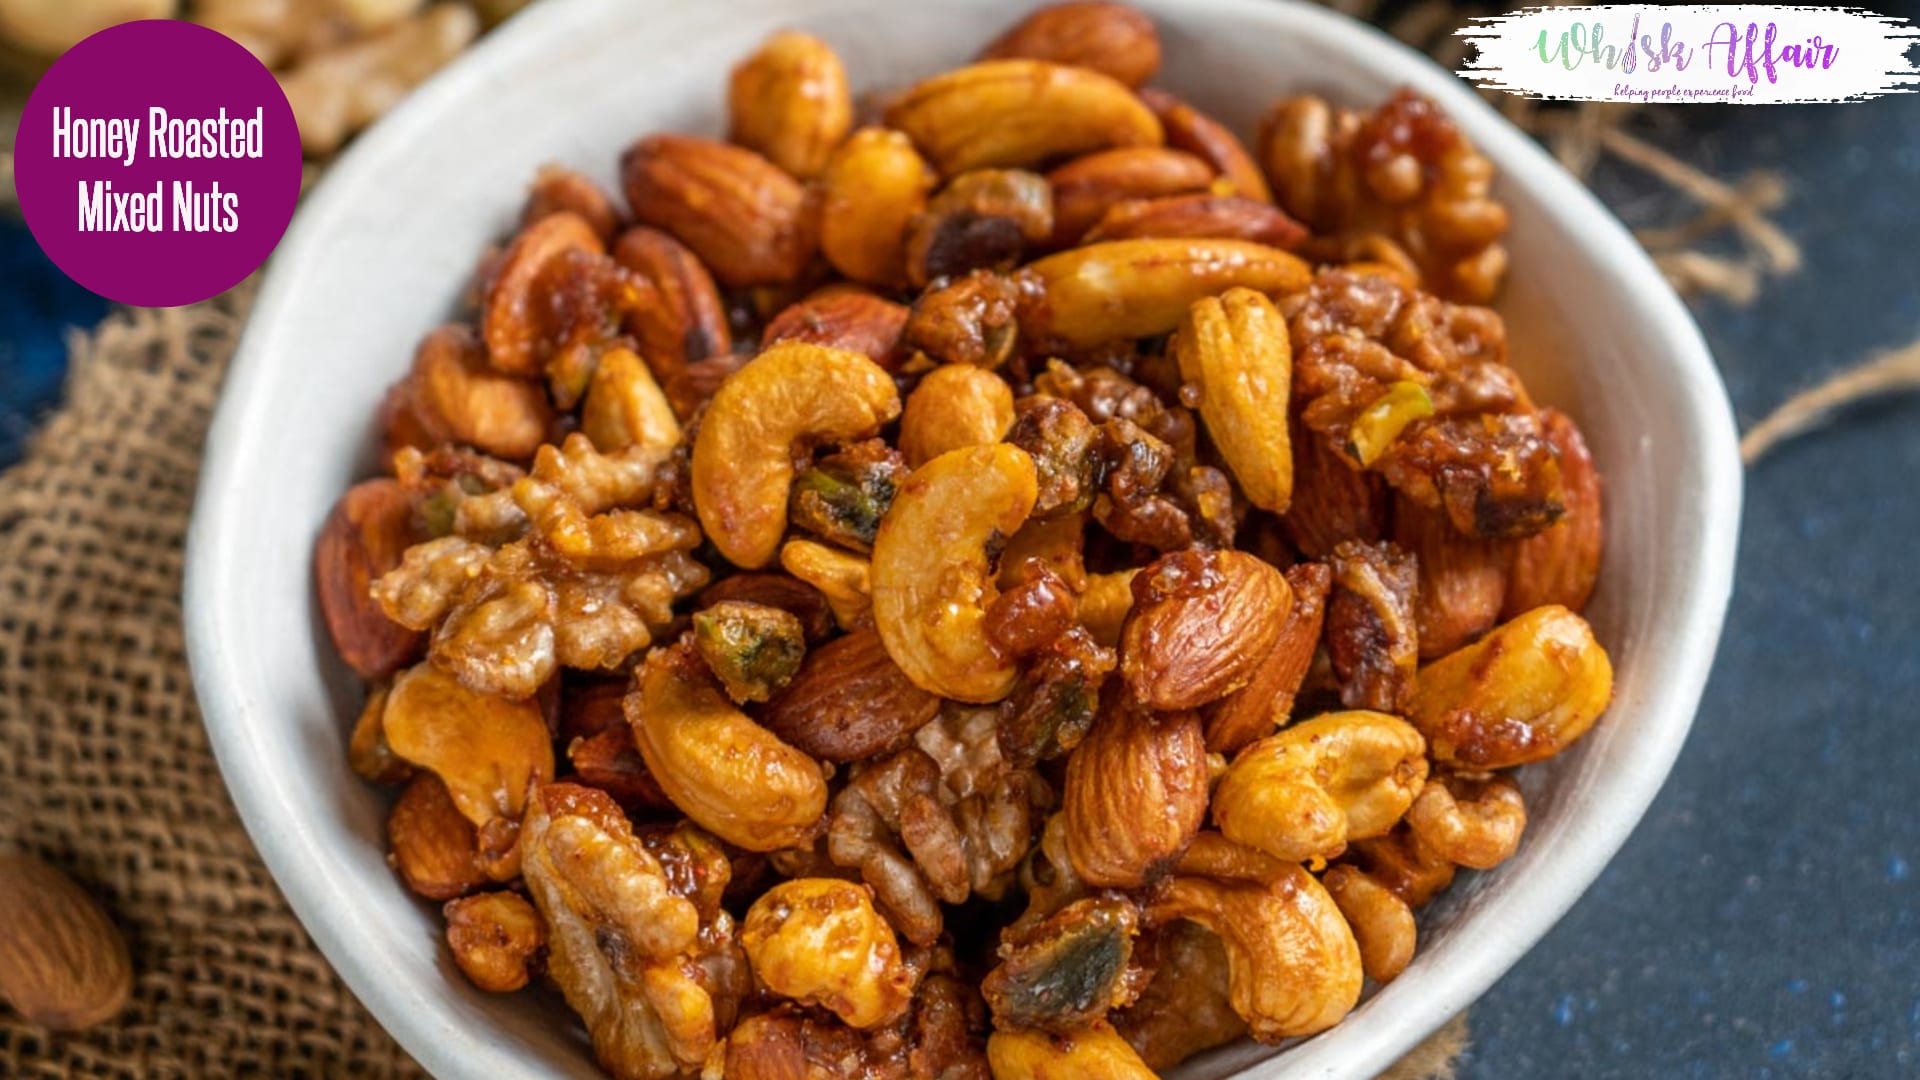 How to Make Homemade Roasted Nuts - Foodology Geek